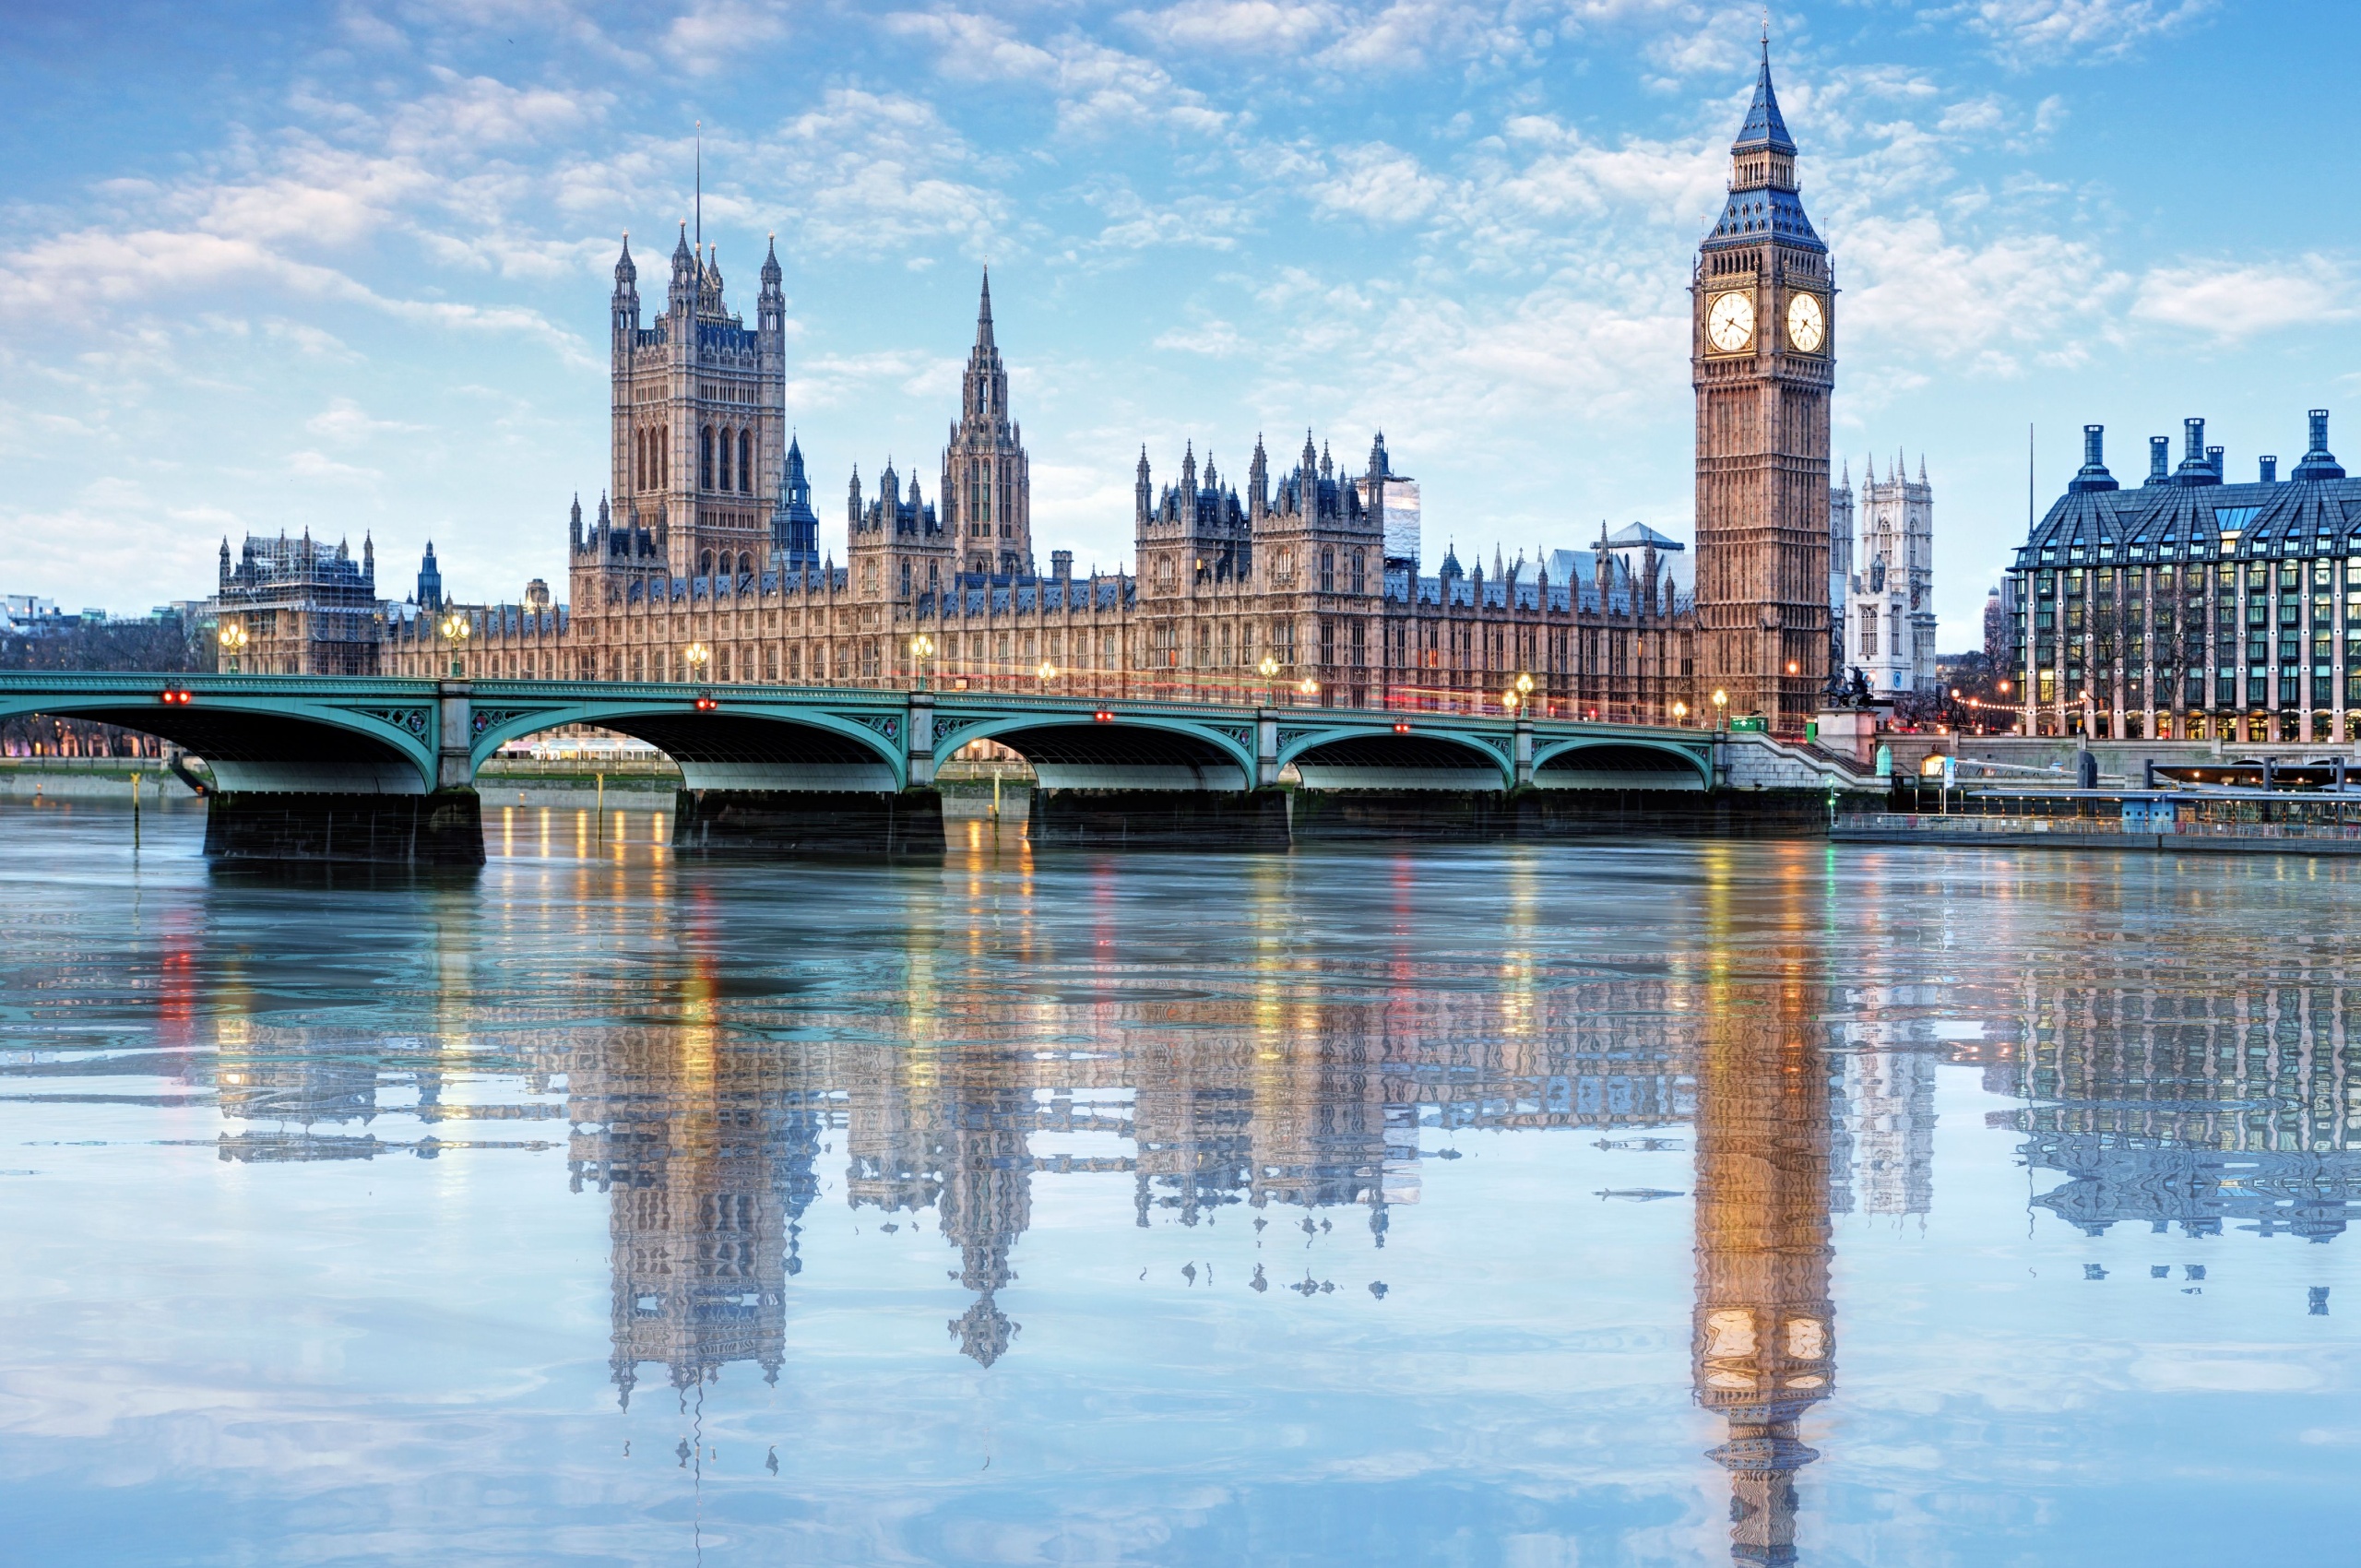 View of UK parliament and Big Ben